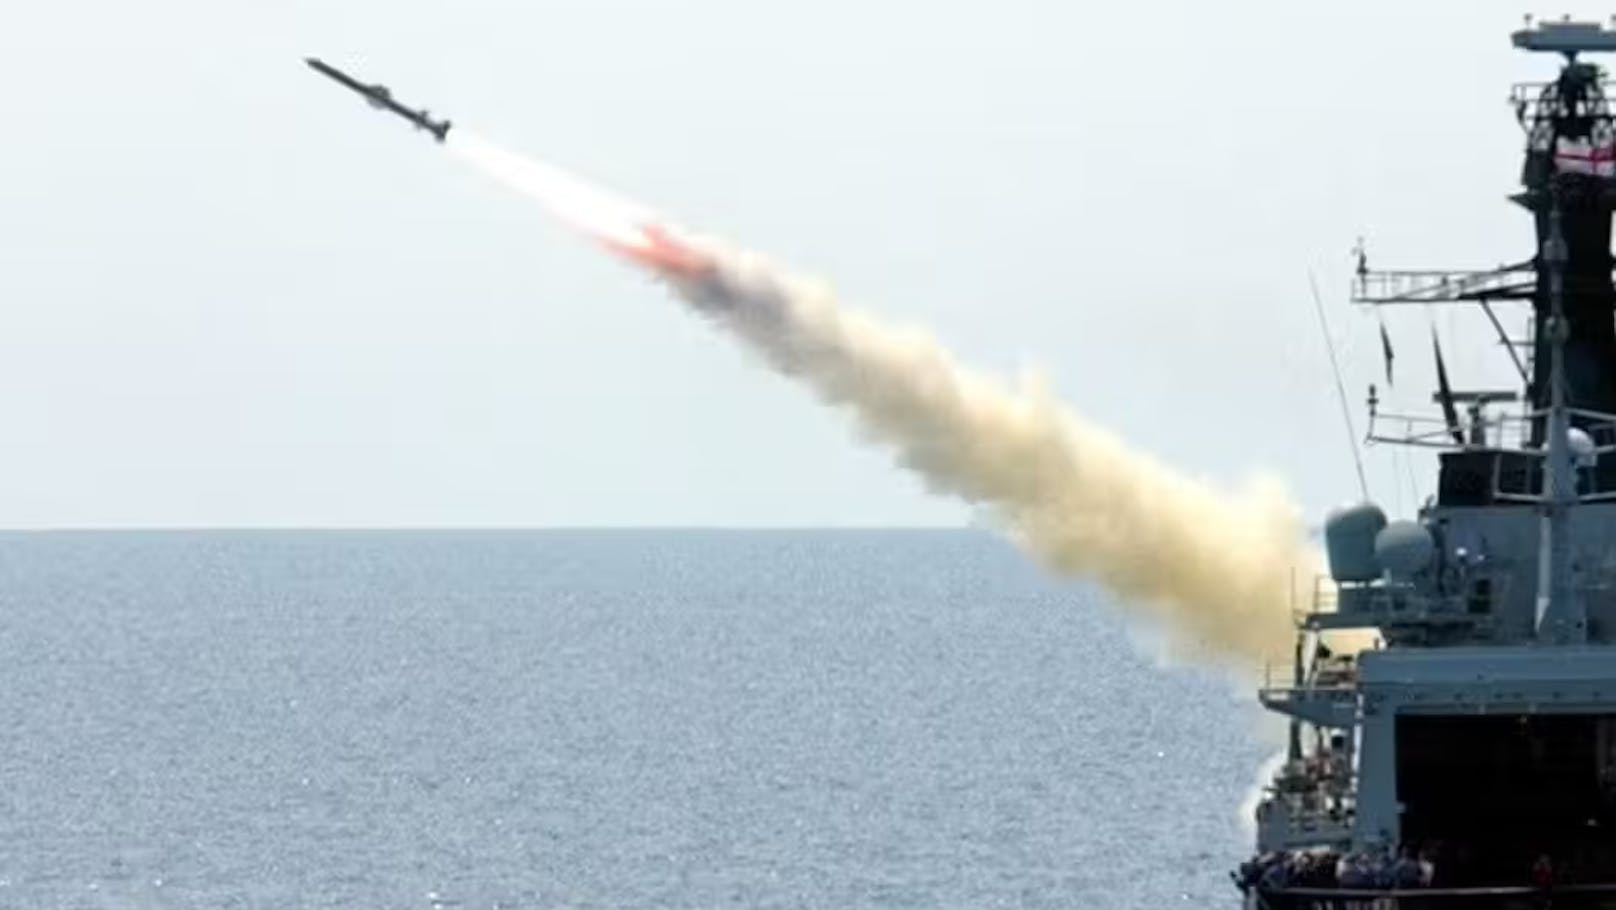 Raketenwerfer defekt – Armee muss ganzes Gebiet sperren